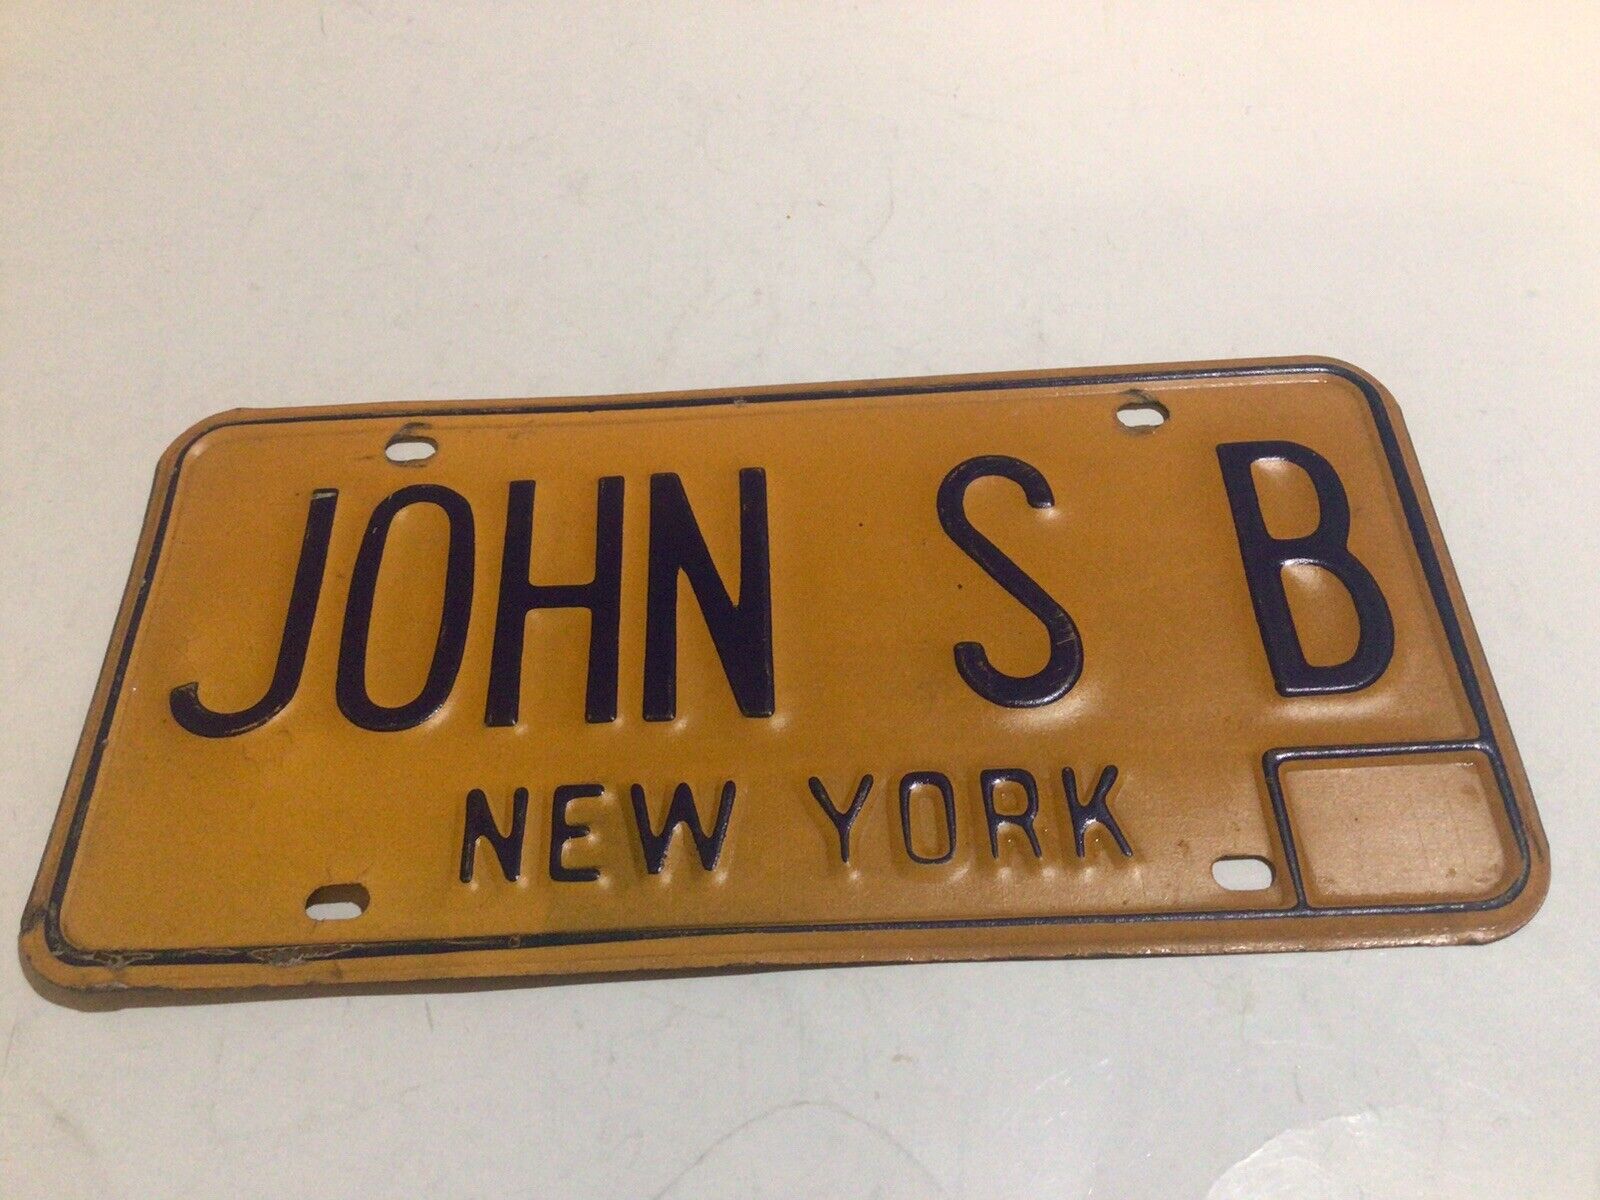 Nice Scarce Vintage 1970’s New York State Vanity License Plate - “ JOHN S B “